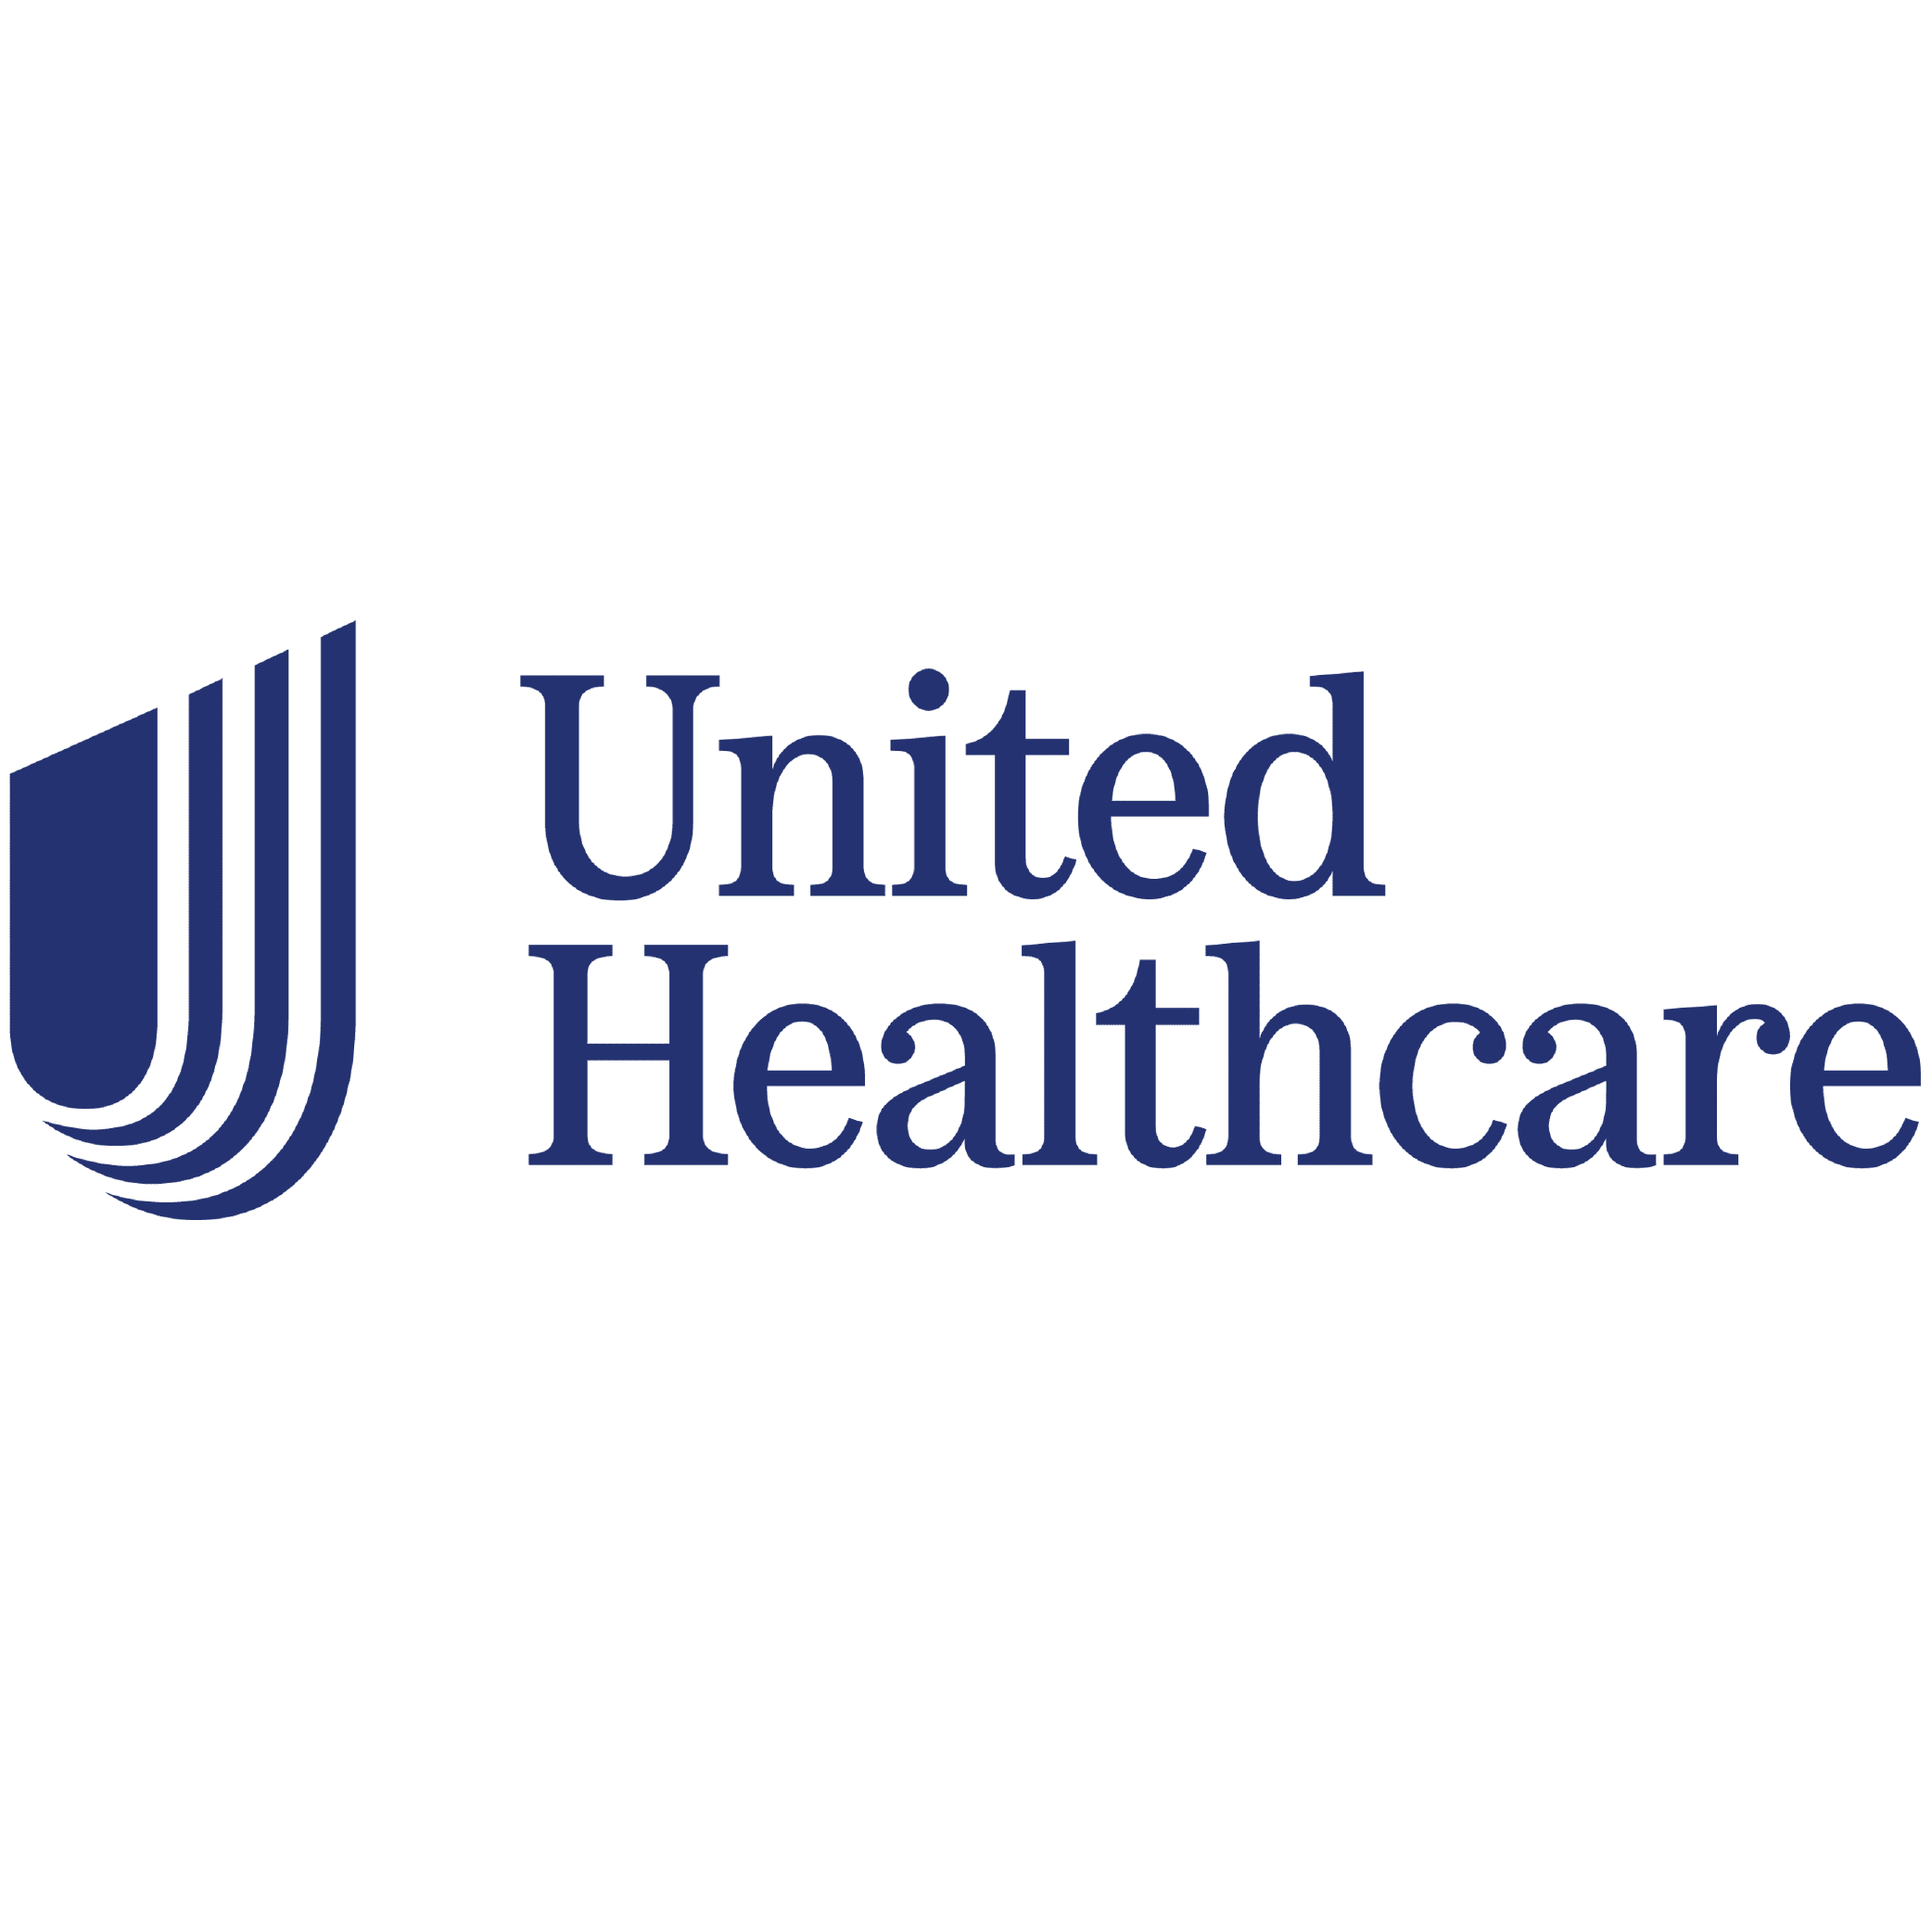 United Healthcare insurance